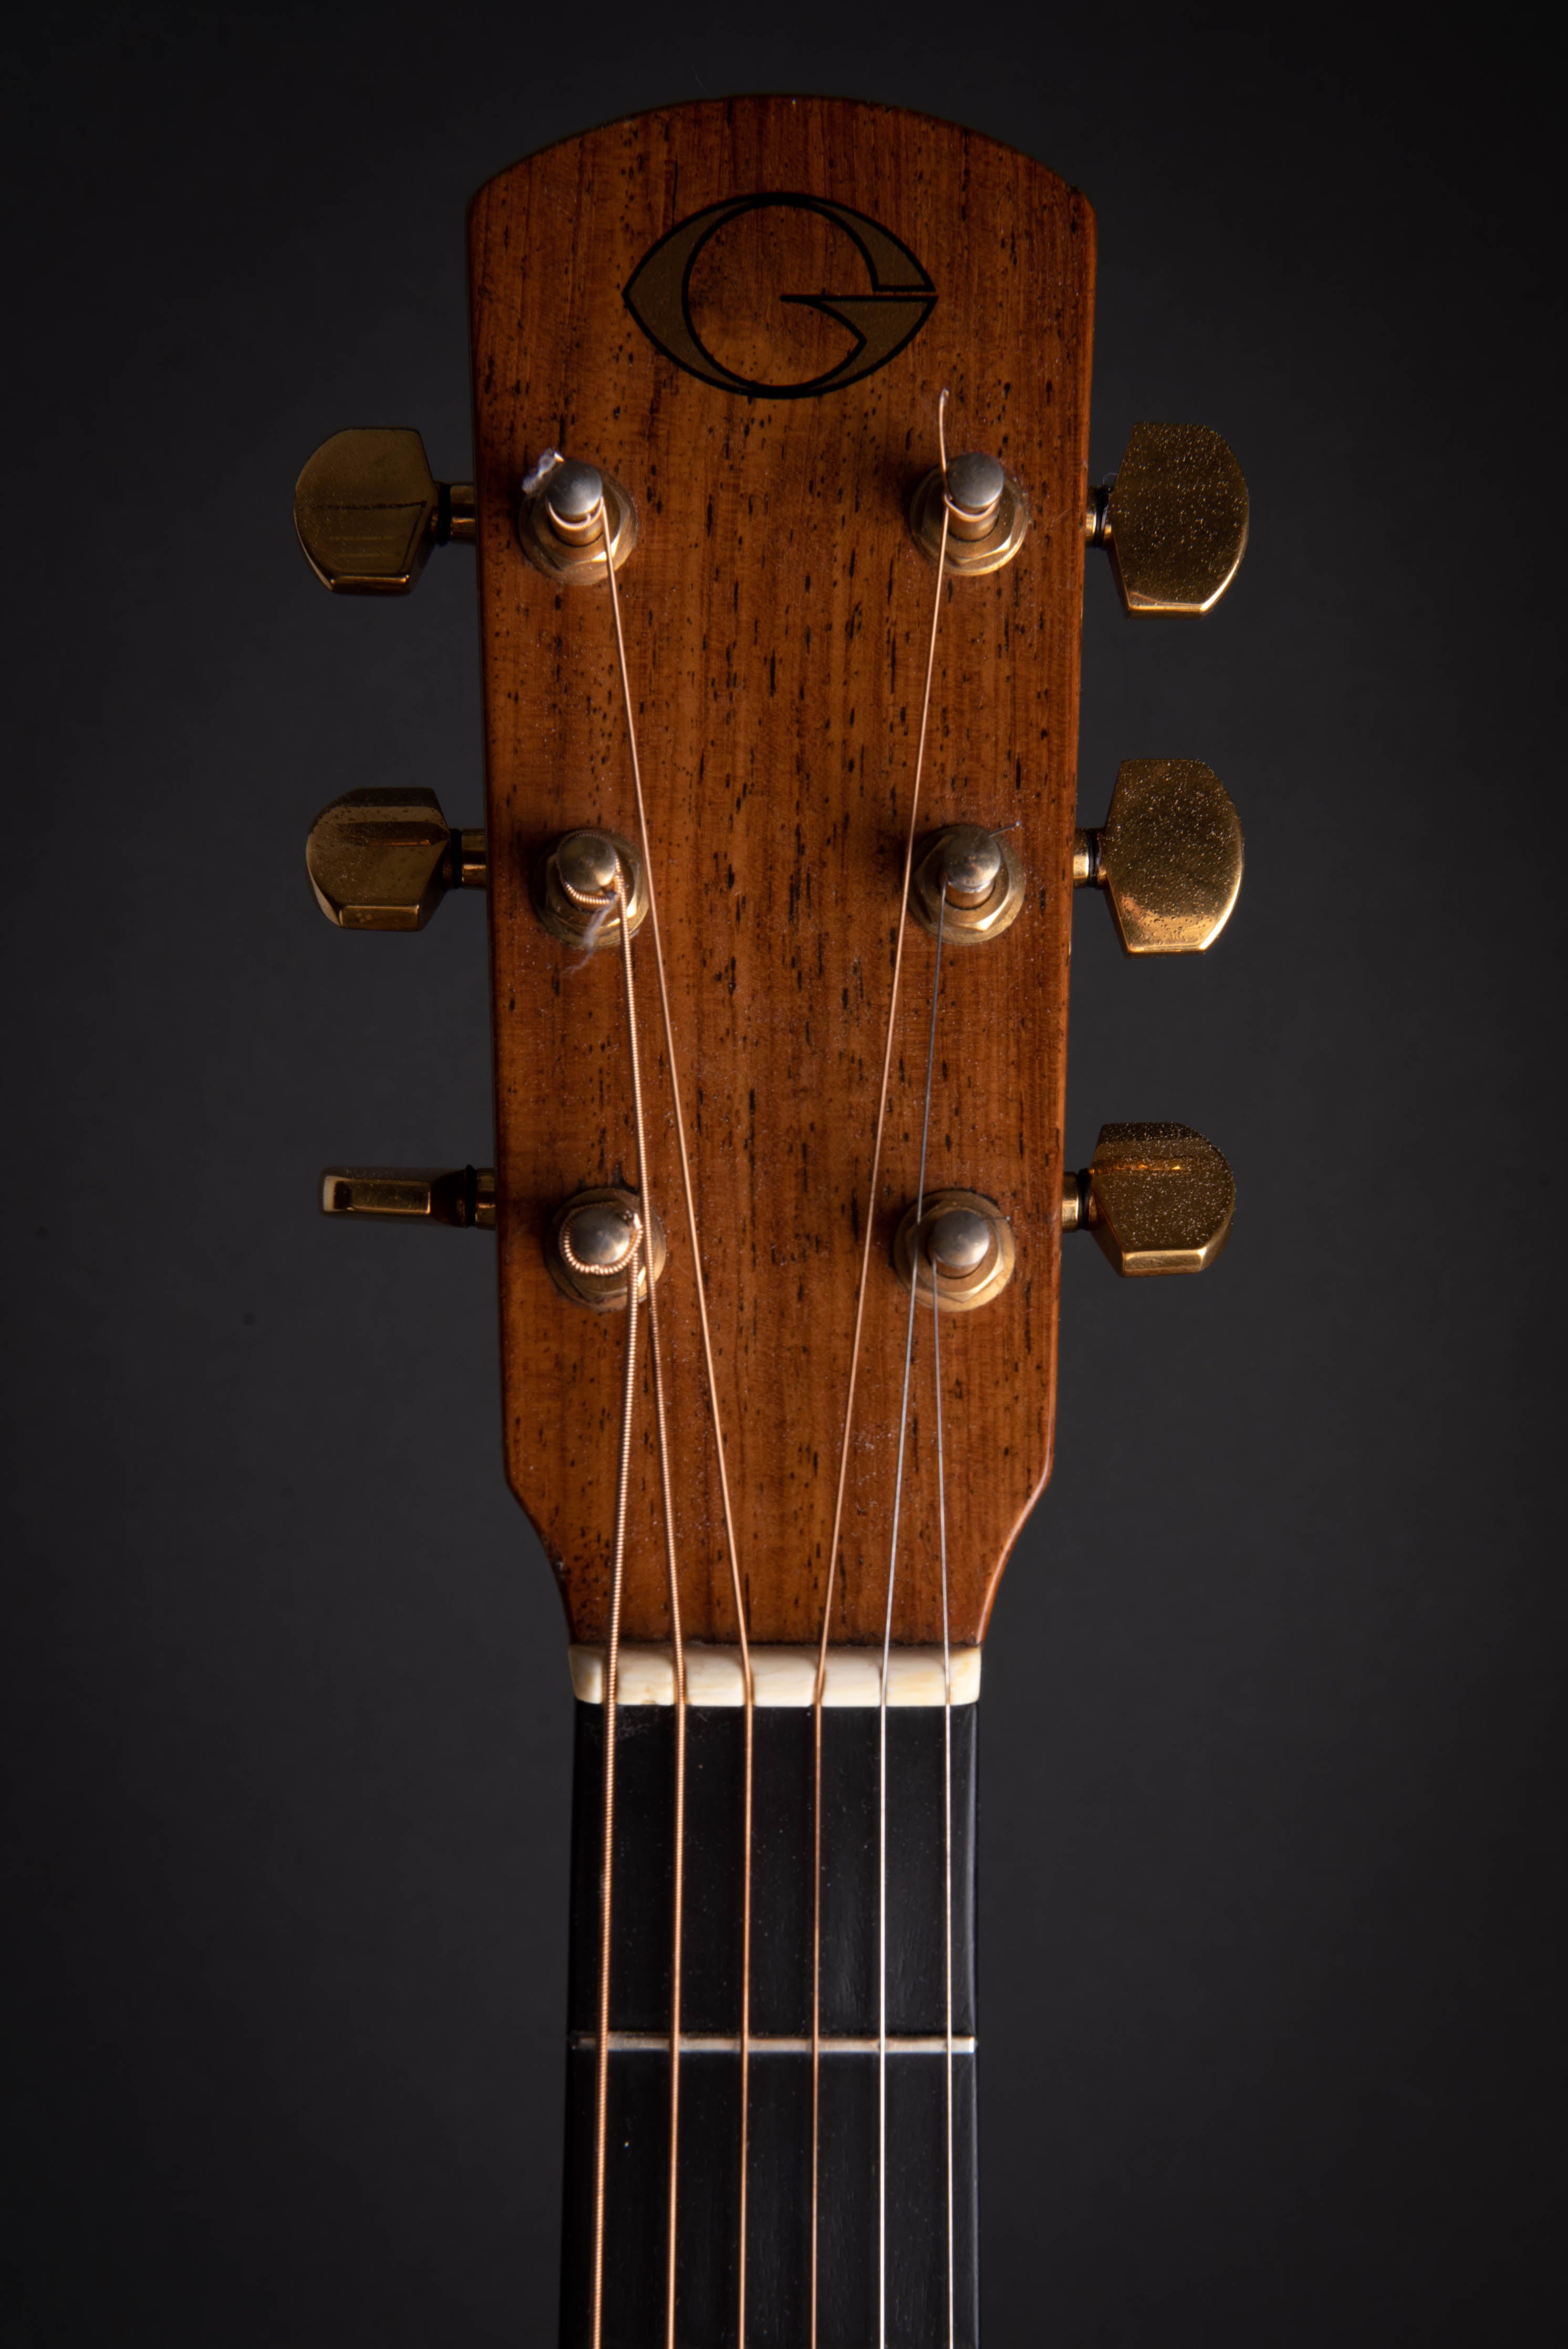 1974 Gurian J-R Acoustic Guitar